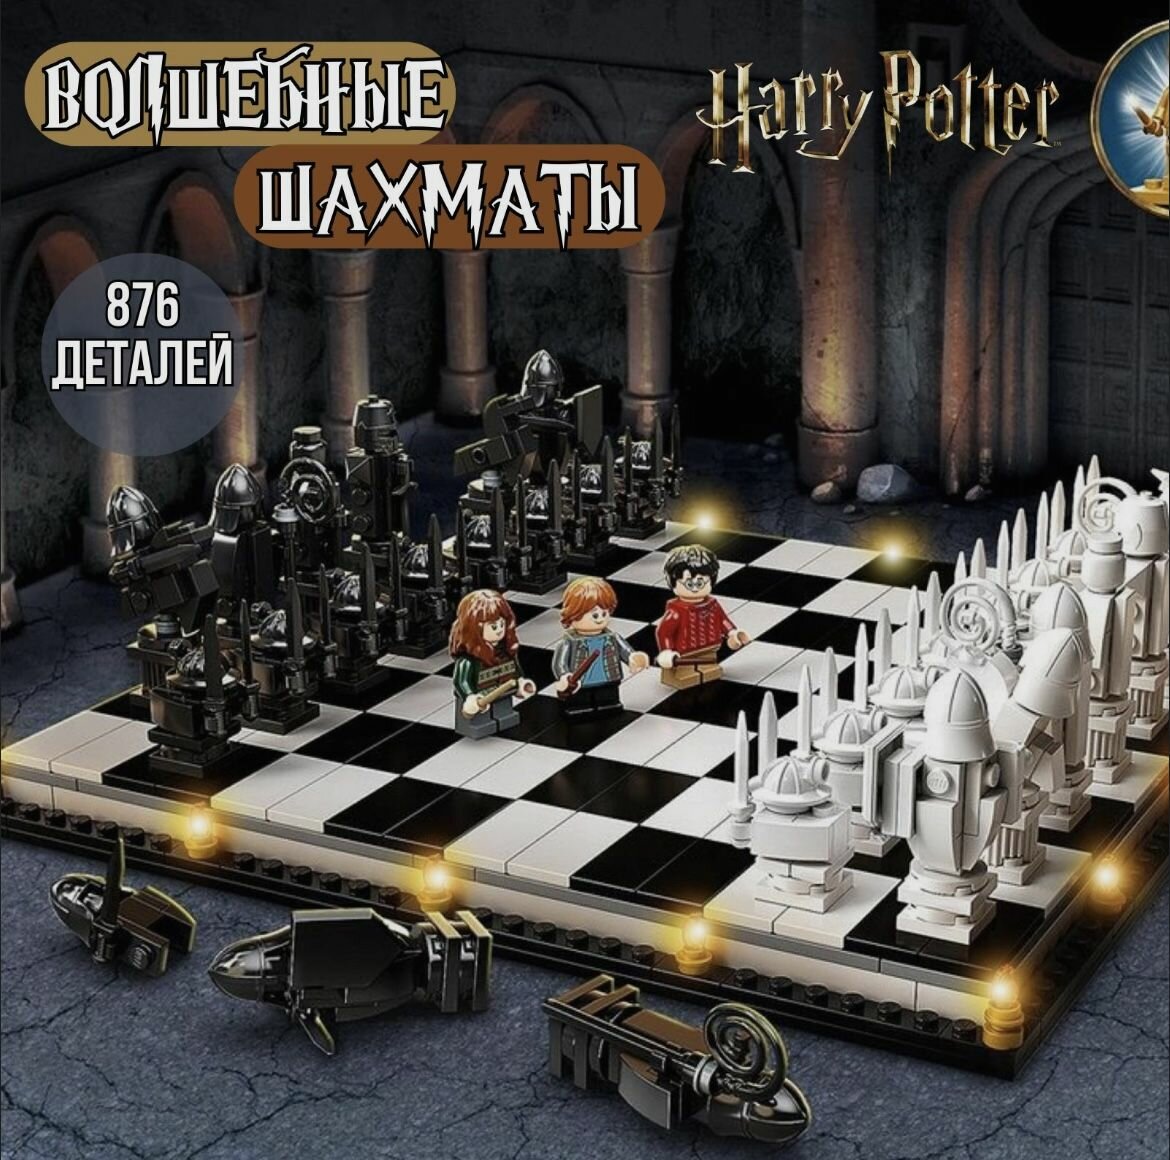 Конструктор 6056 Harry Potter "Хогвартс: Волшебные шахматы" 876 дет.